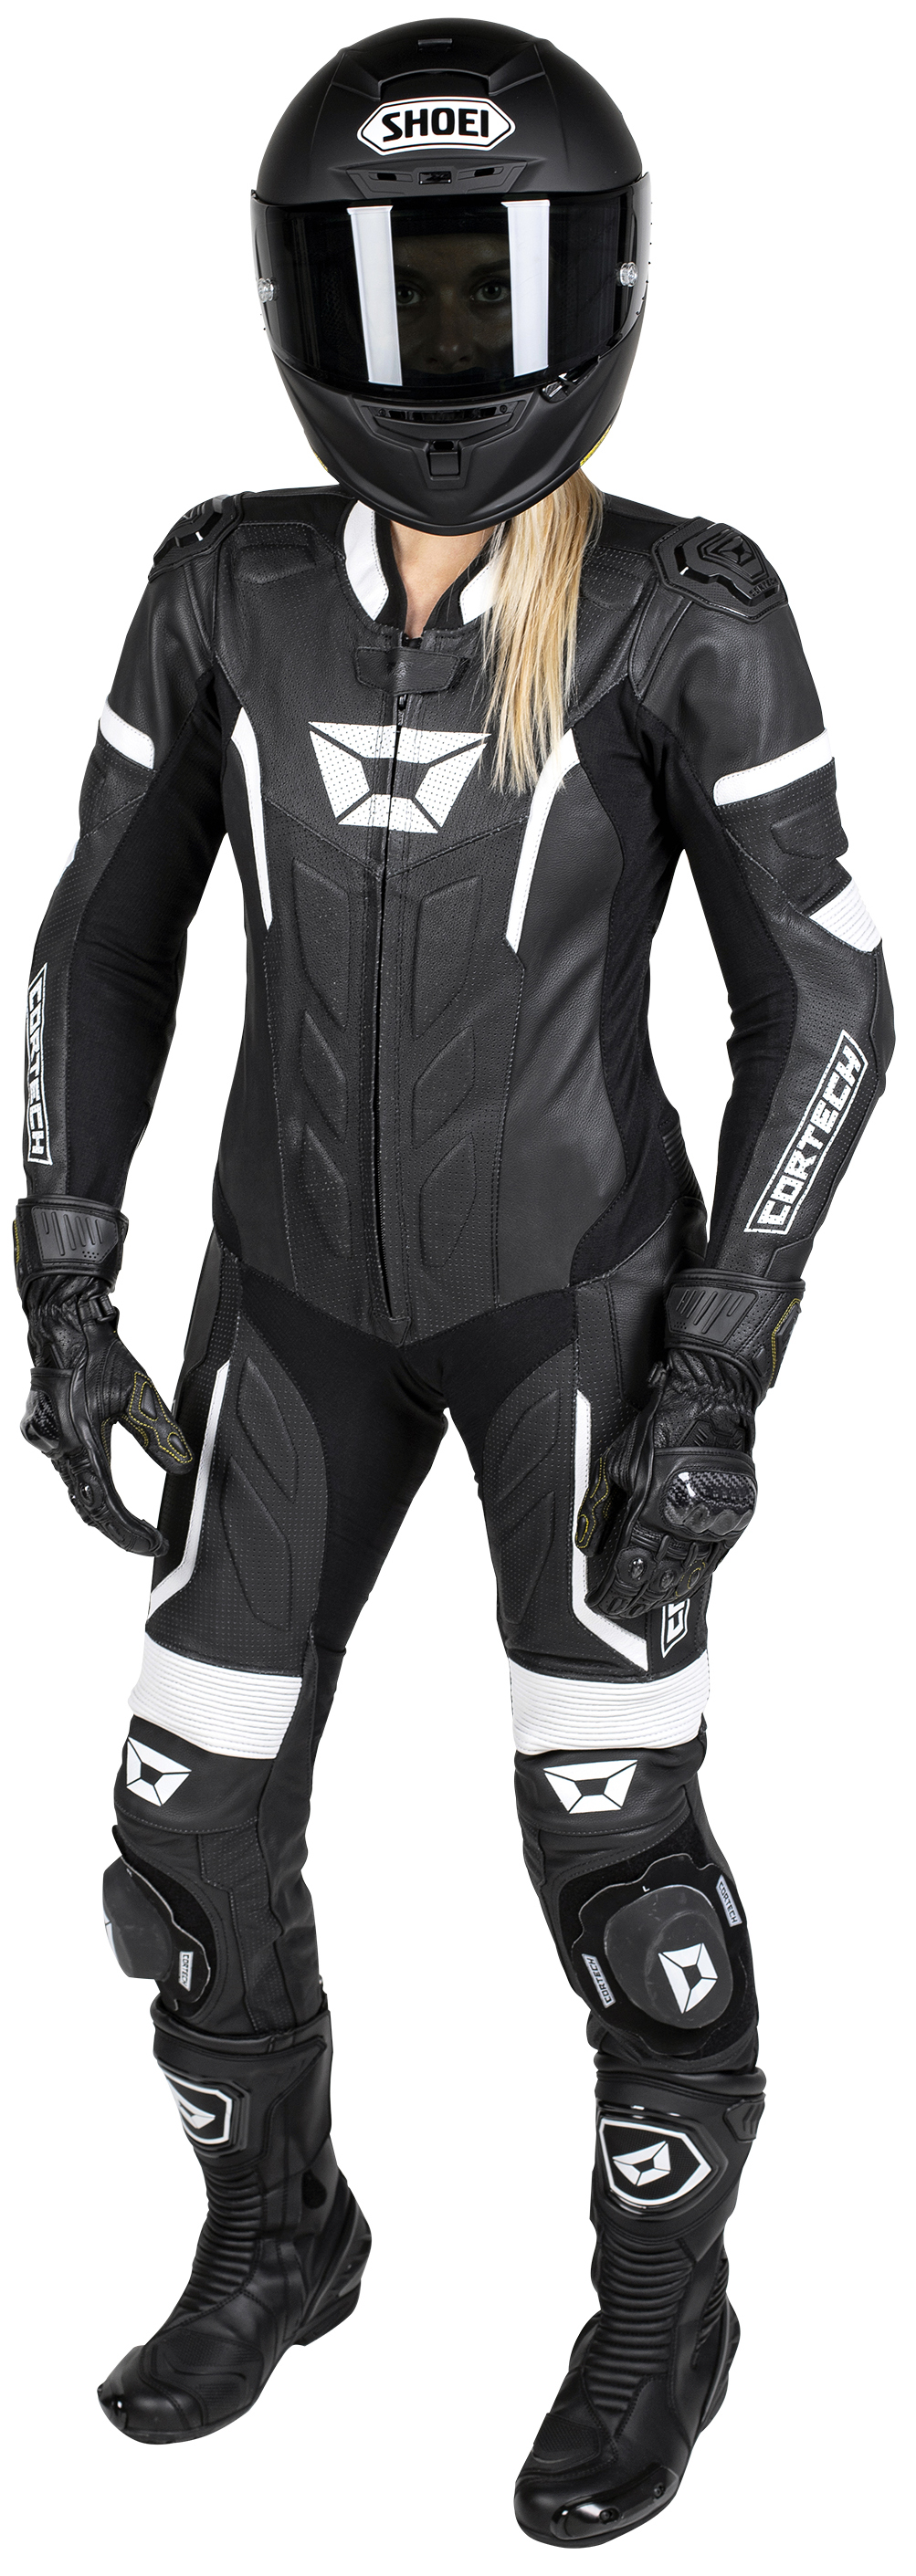 Men's Apex V1 RR Leather One-Piece Race Suit Black/White Large - Click Image to Close